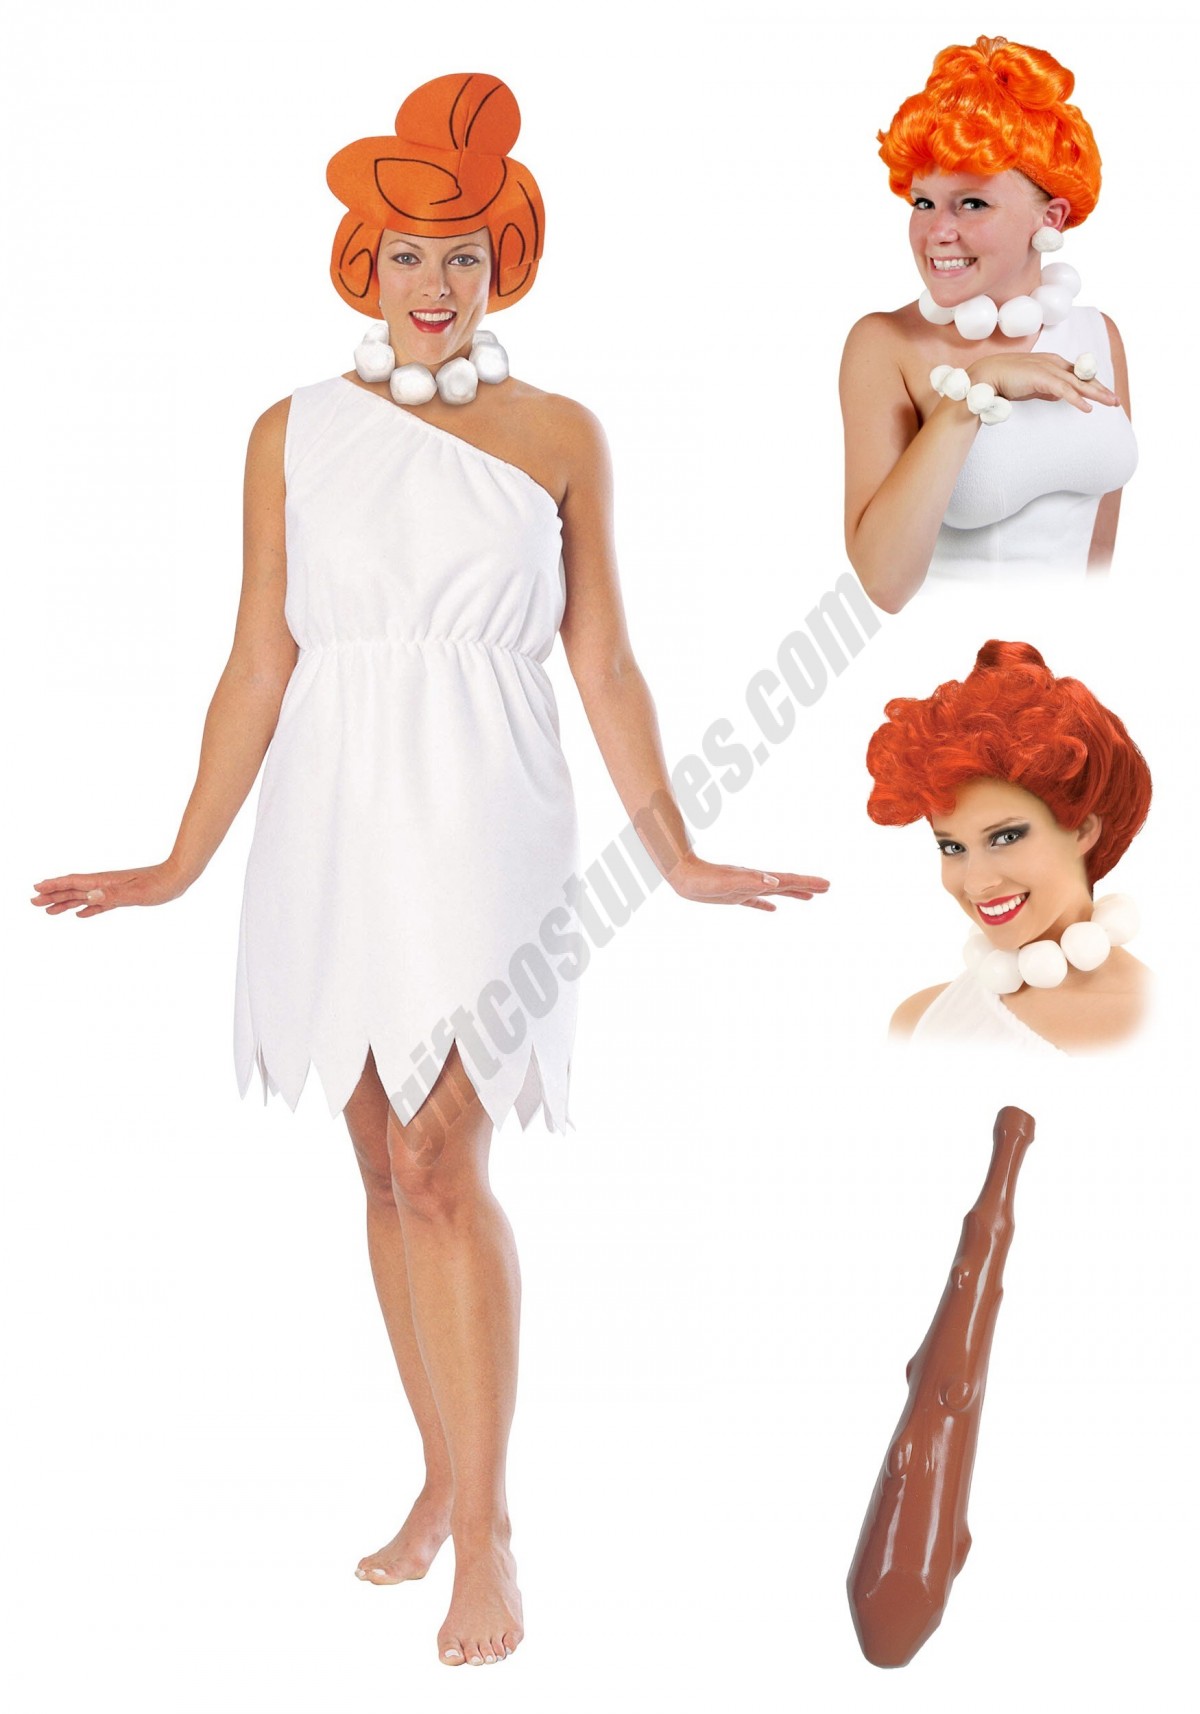 Ladies Wilma Flintstone Costume Package - Women's - -0